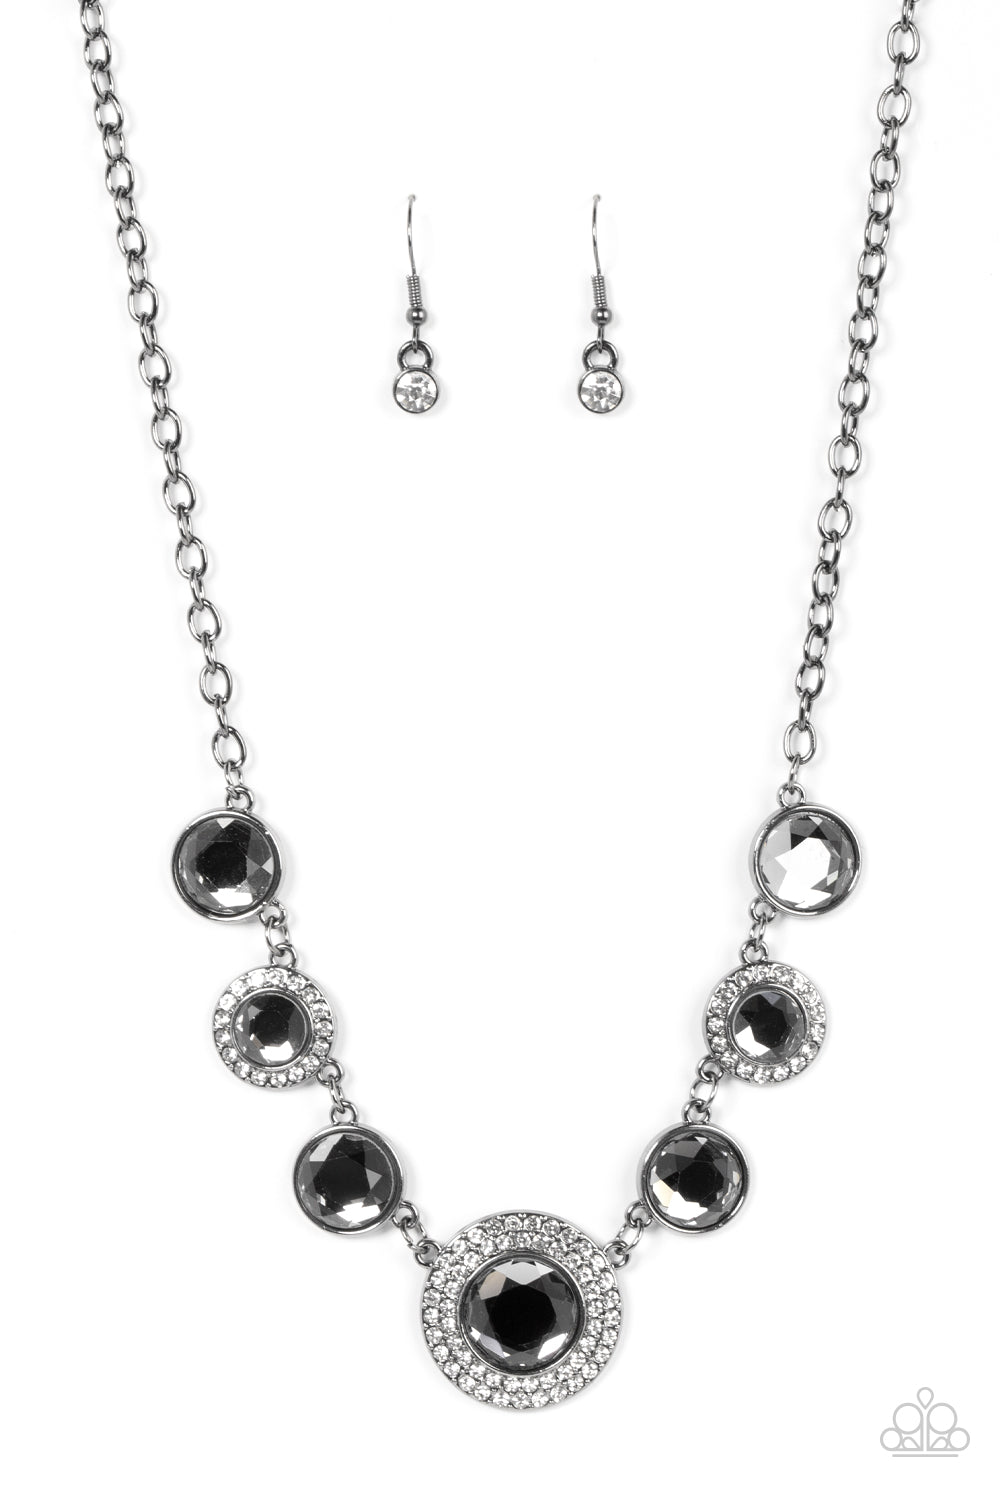 Oversized smoky gems alternate with matching gems bordered in rings of glassy white rhinestones